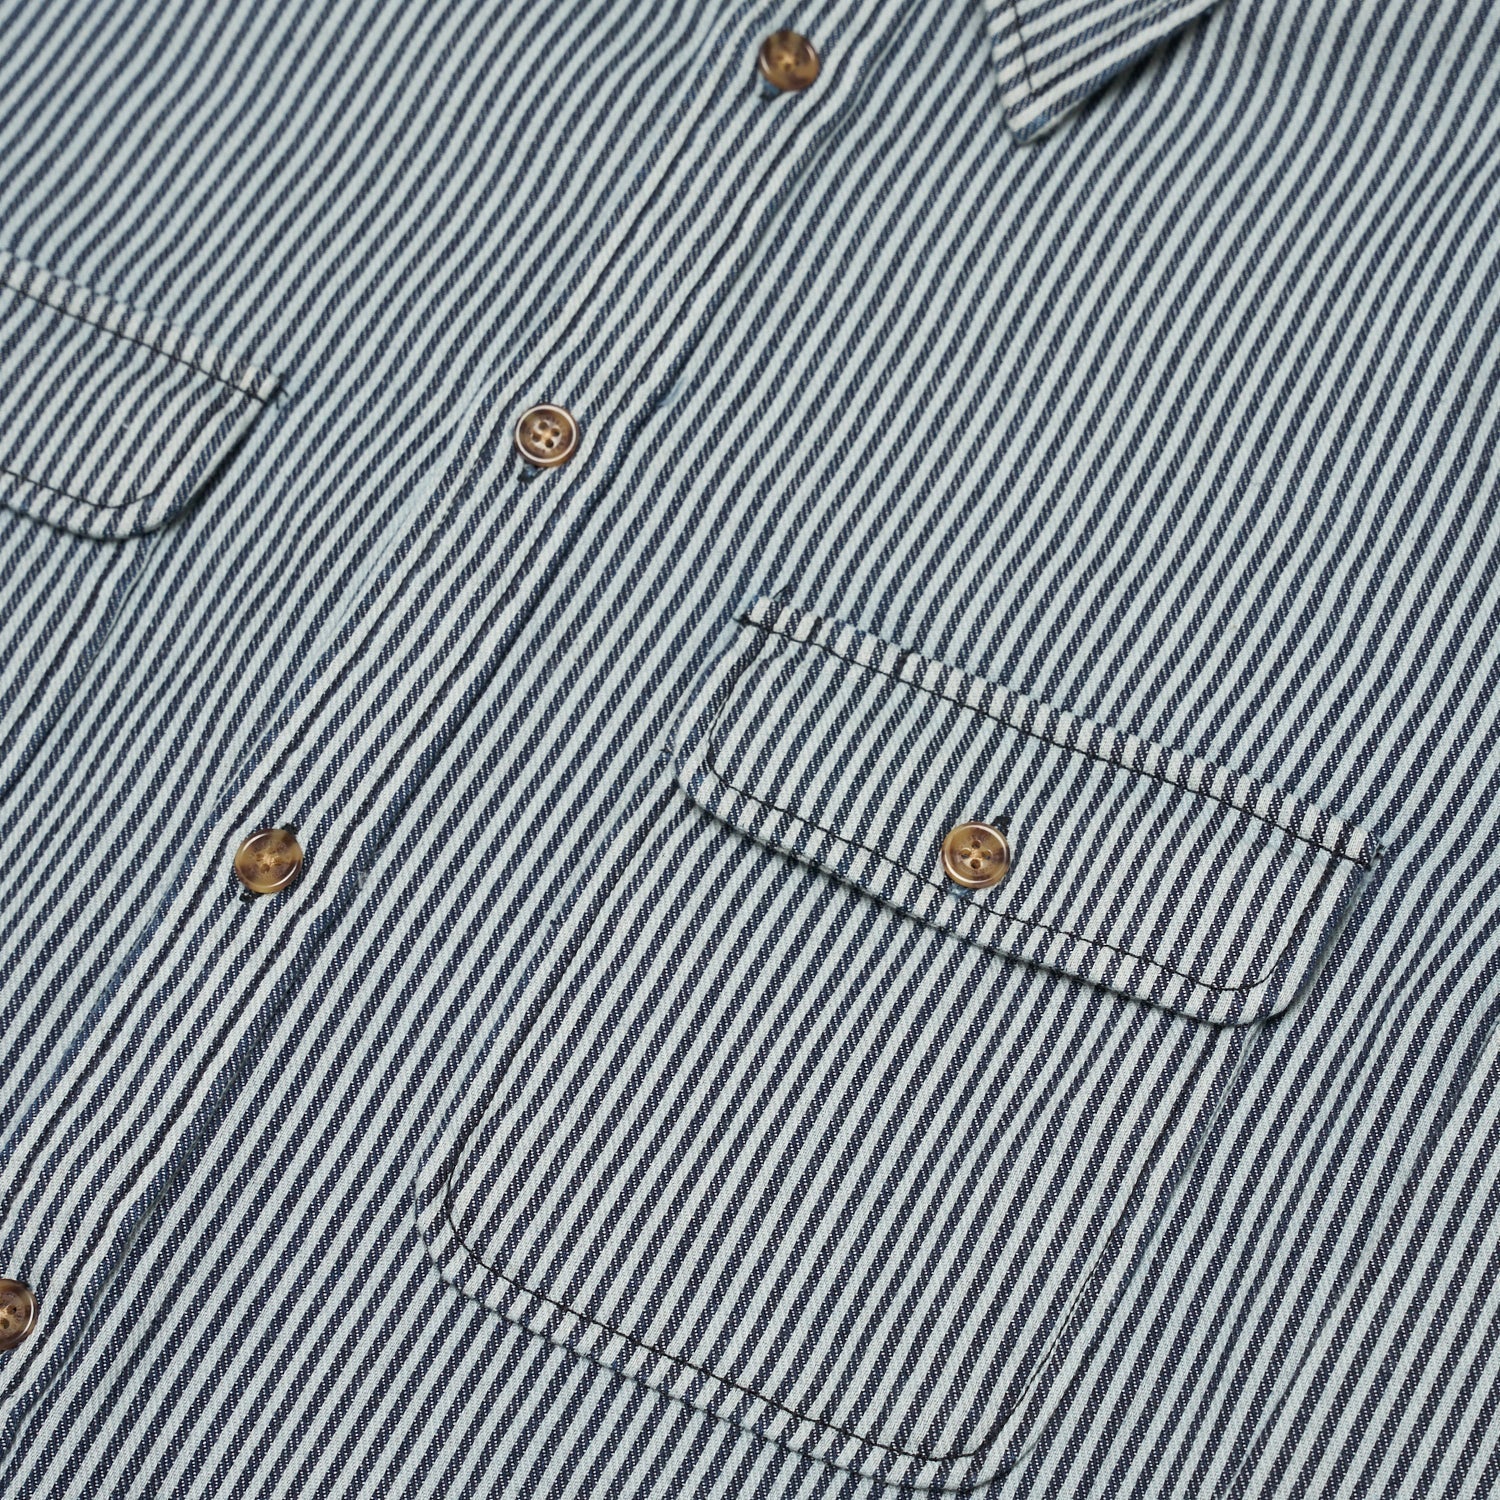 Milton Shirt - Double Faced Stripe Denim